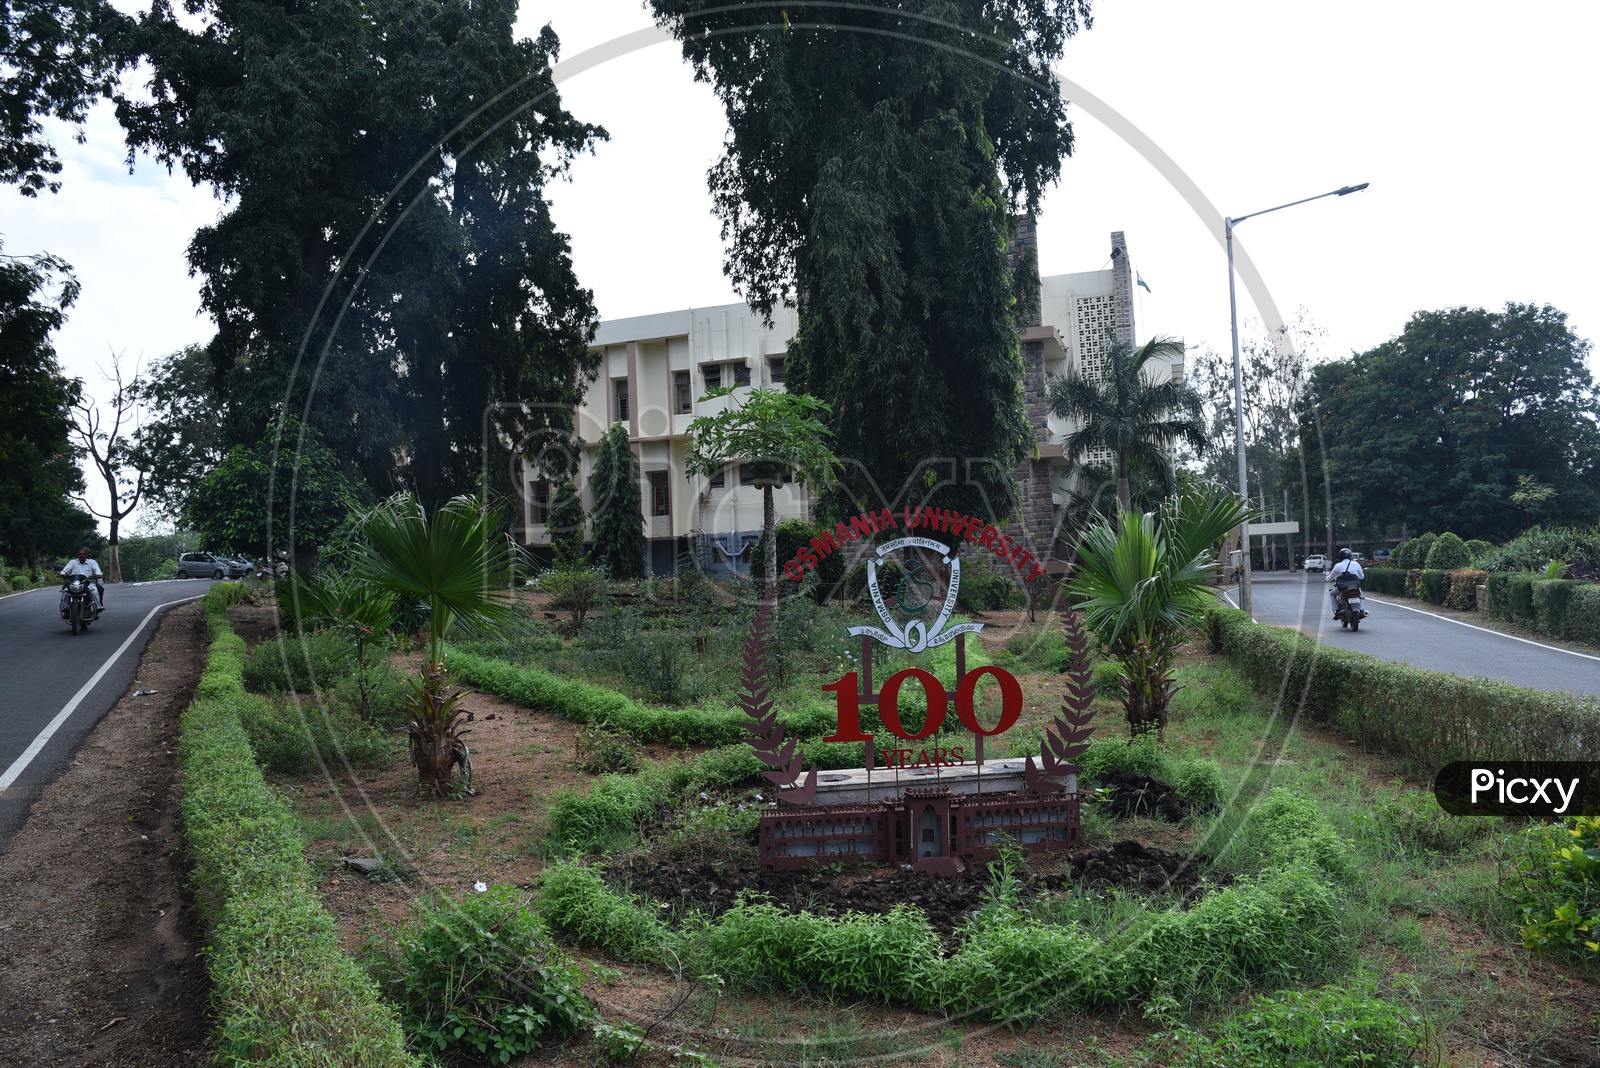 100 years of Osmania University